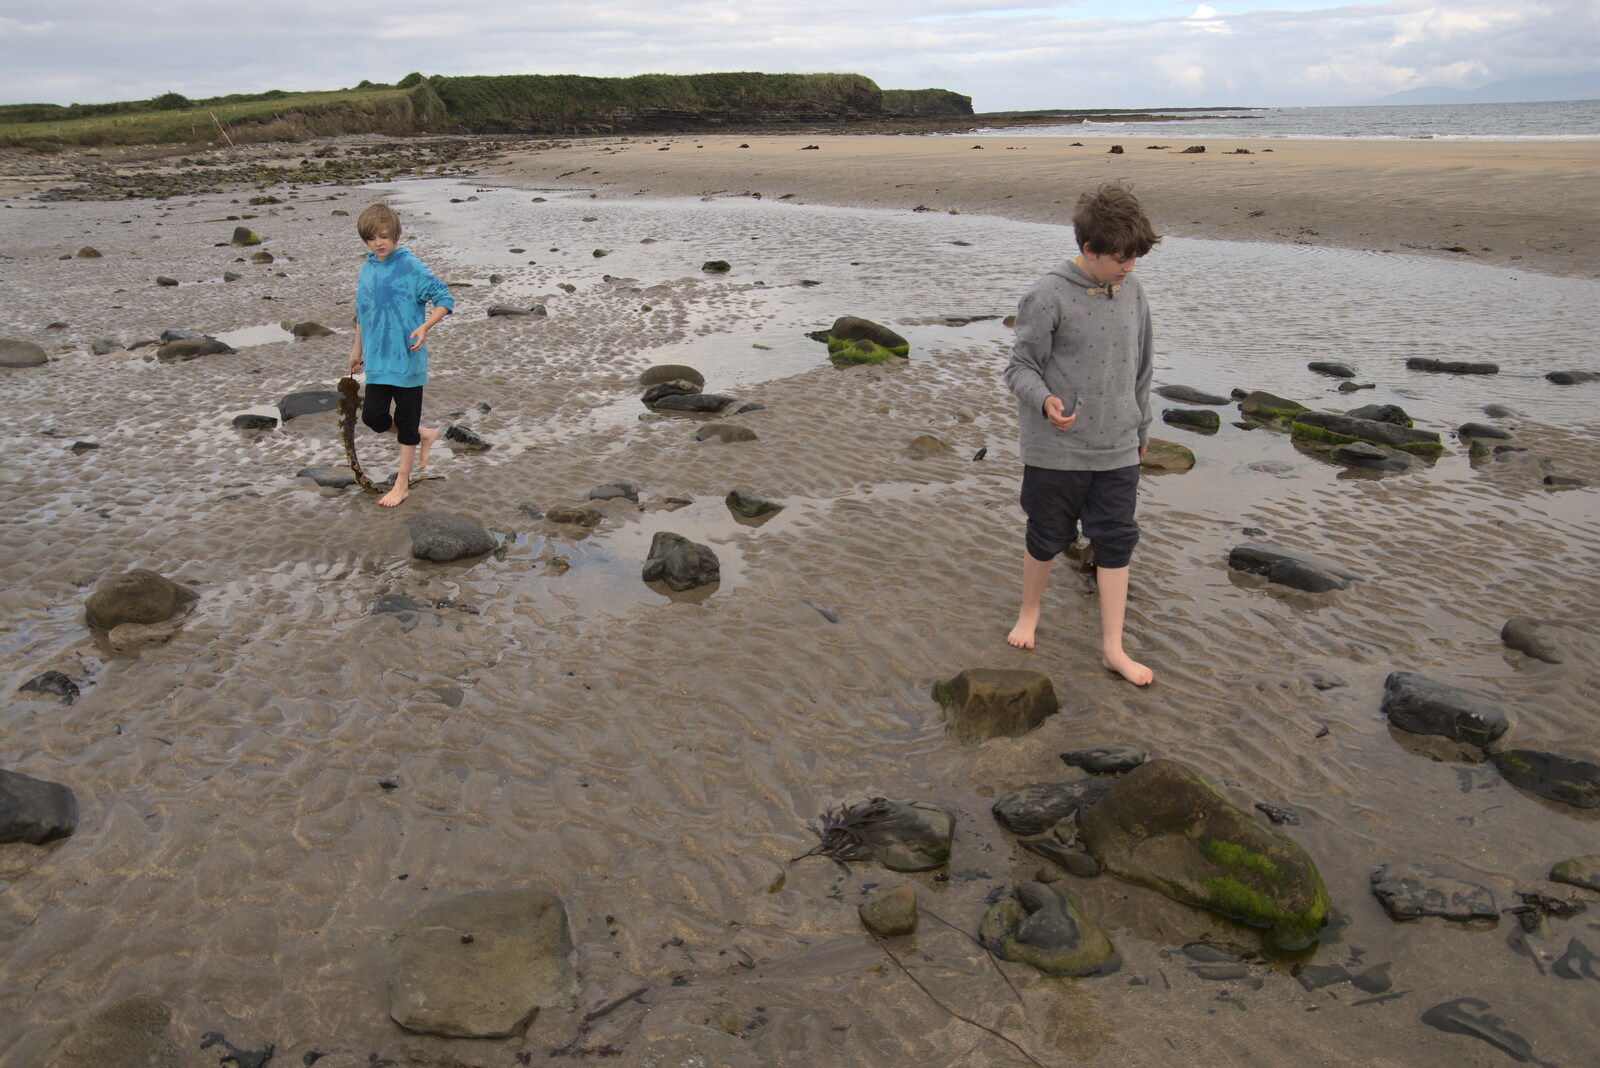 Pints of Guinness and Streedagh Beach, Grange and Sligo, Ireland - 9th August 2021: The boys roam around on the beach